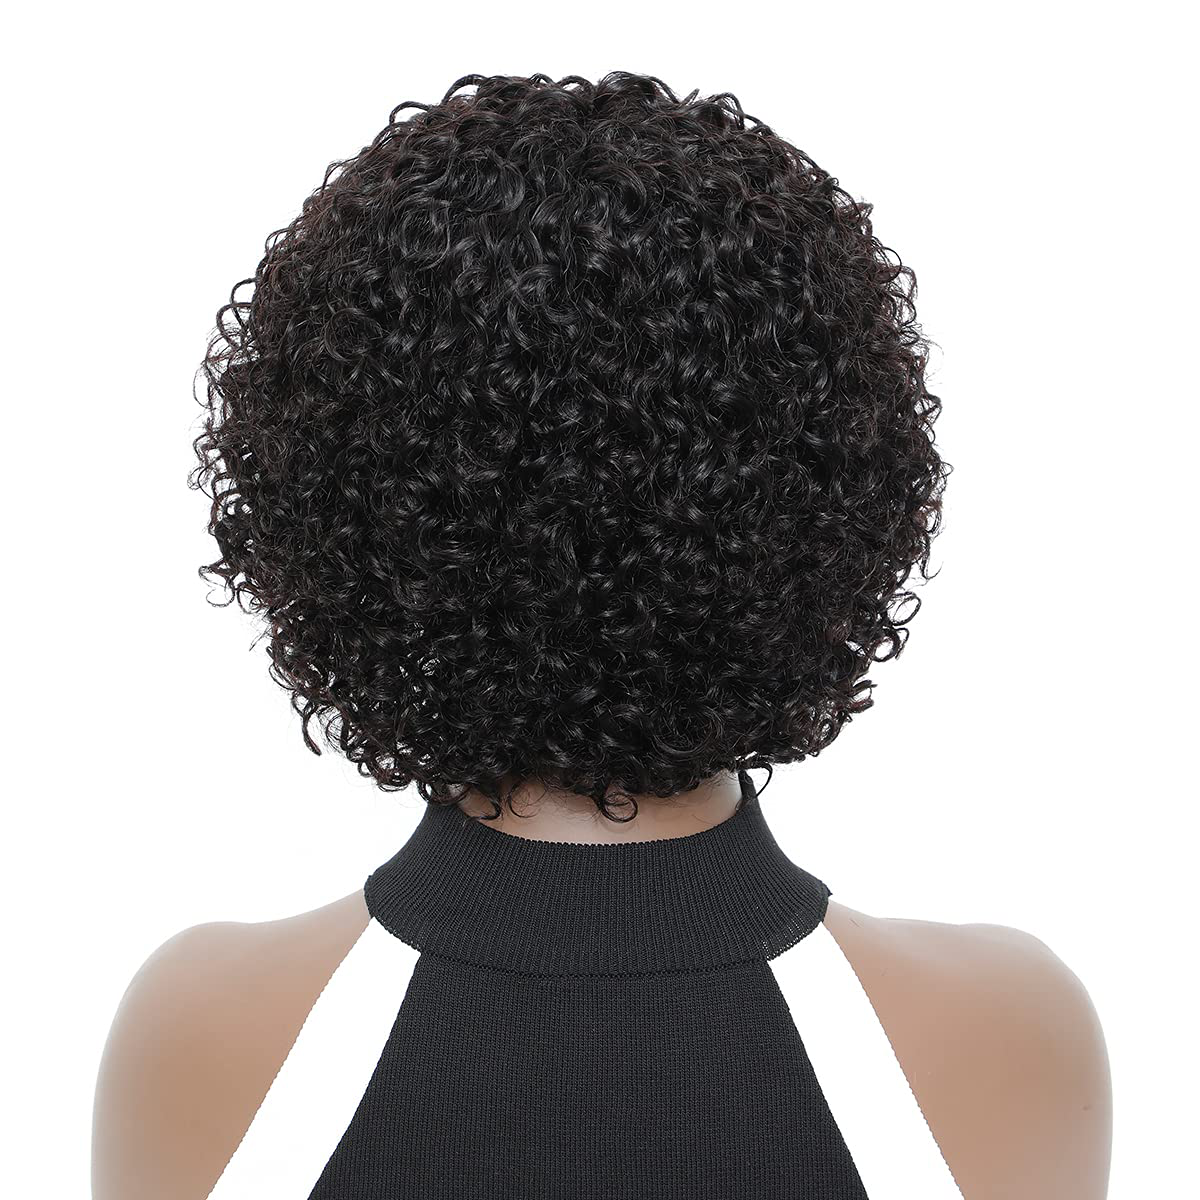 Short Bob Curly Human Hair Wigs |150% Density |Older Women 